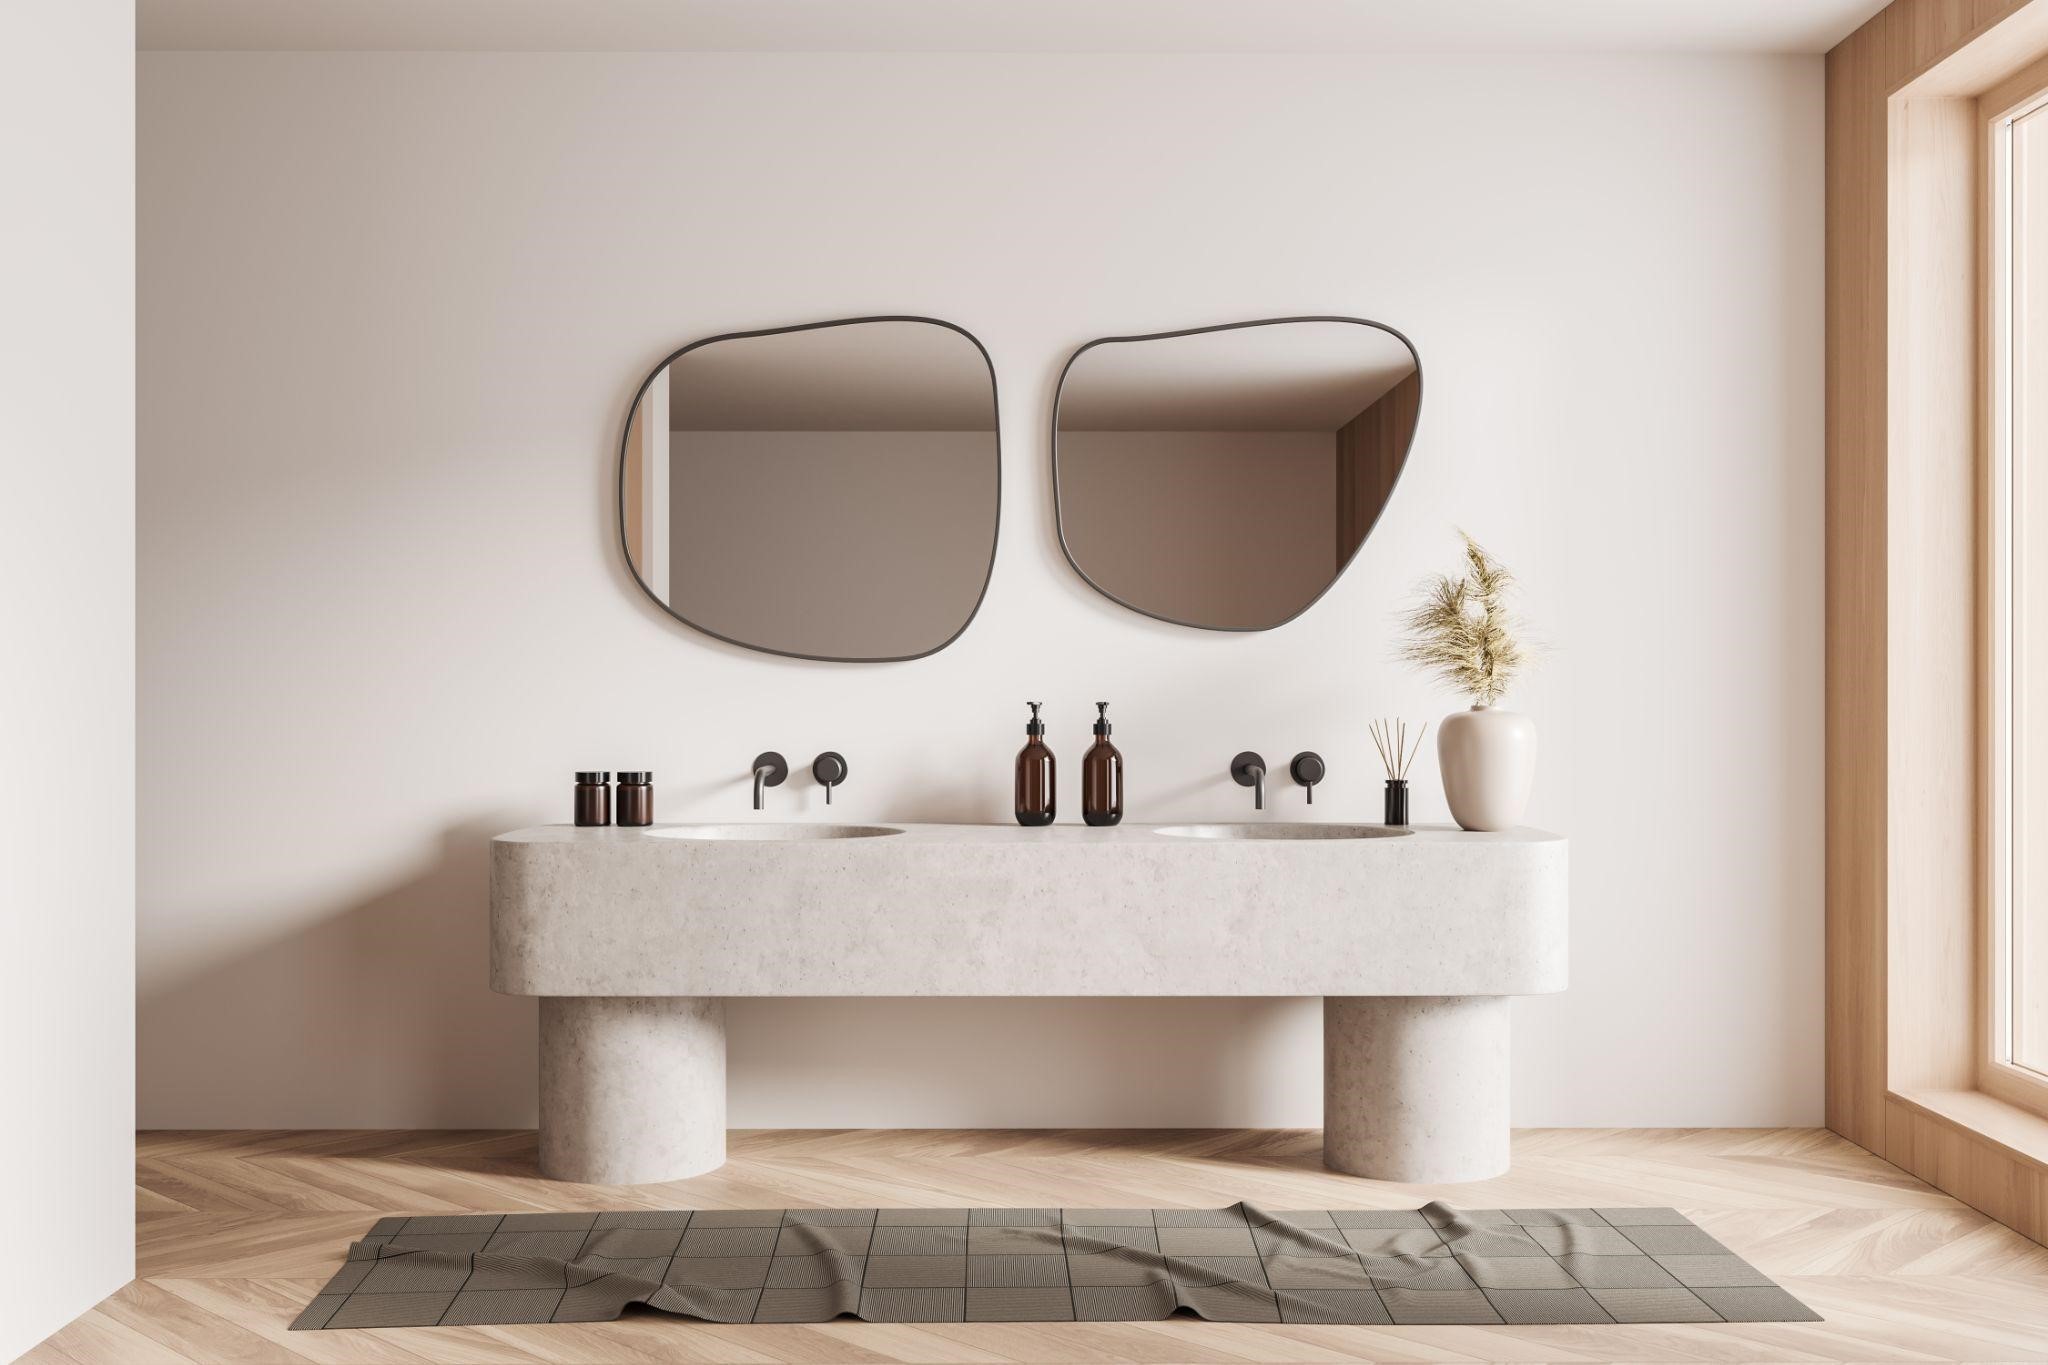 Modern Grainy Finish - Washroom Vanity Designs